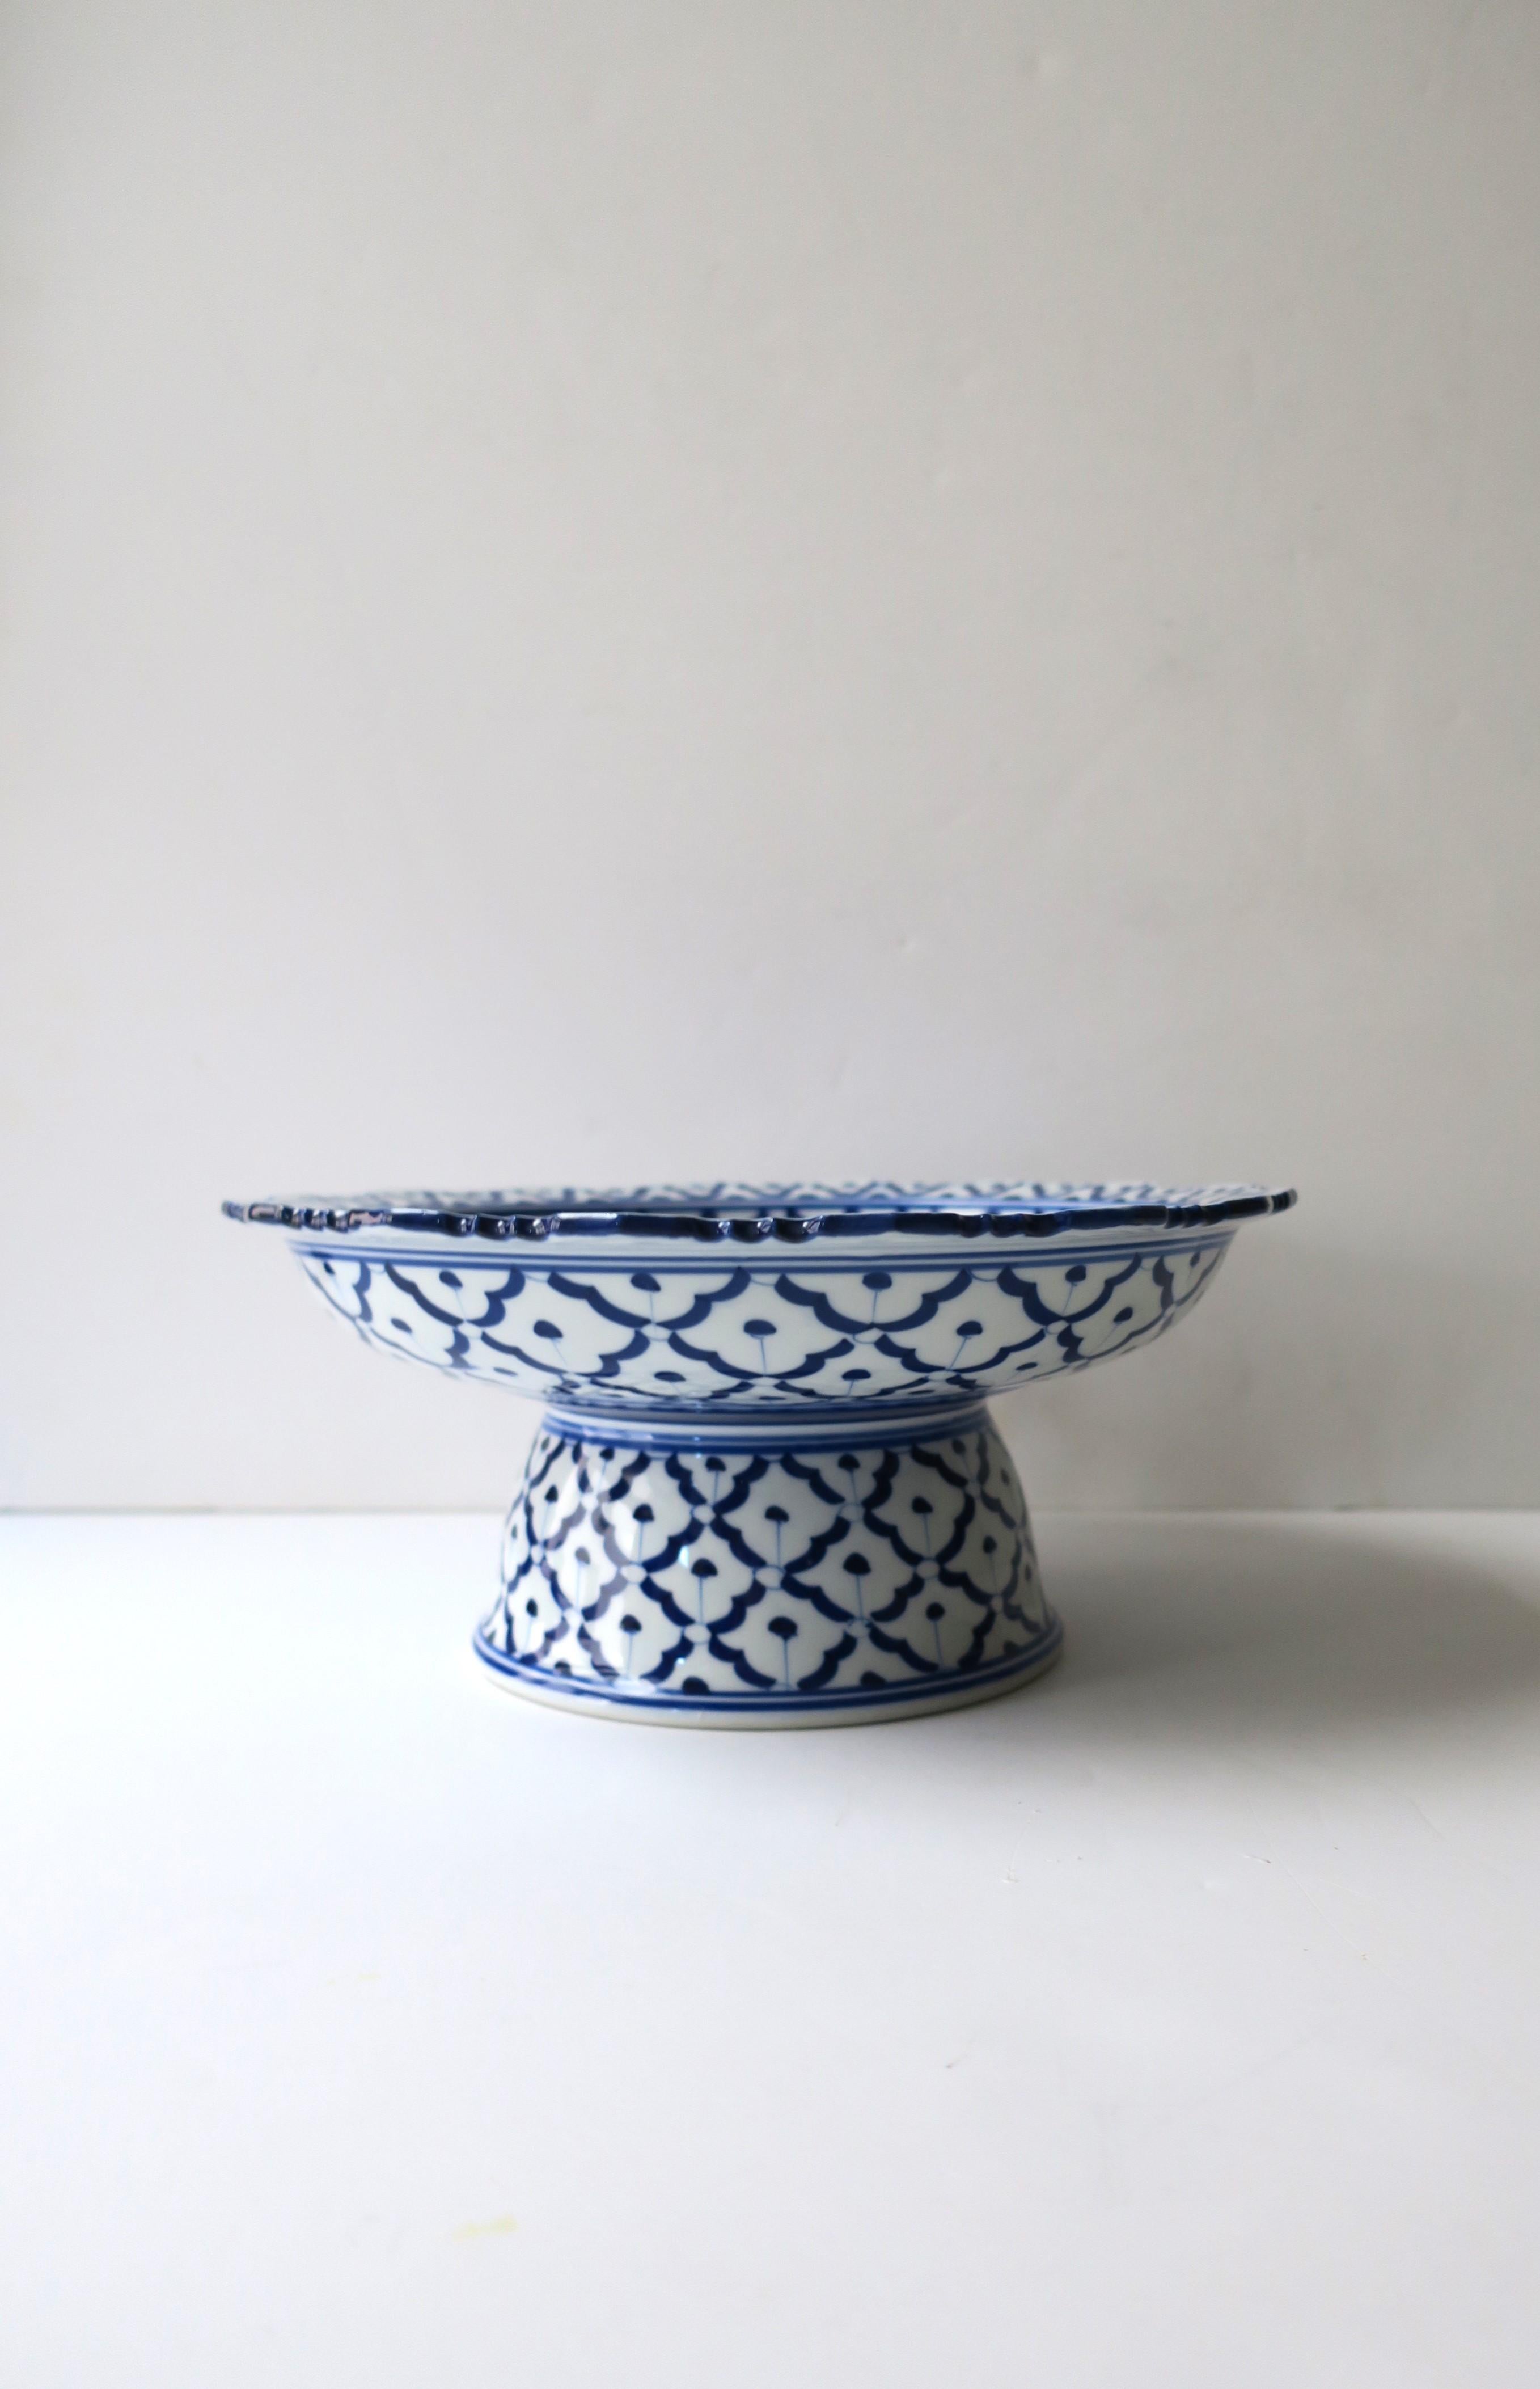 Moorish Blue and White Ceramic Centerpiece Bowl Compote  For Sale